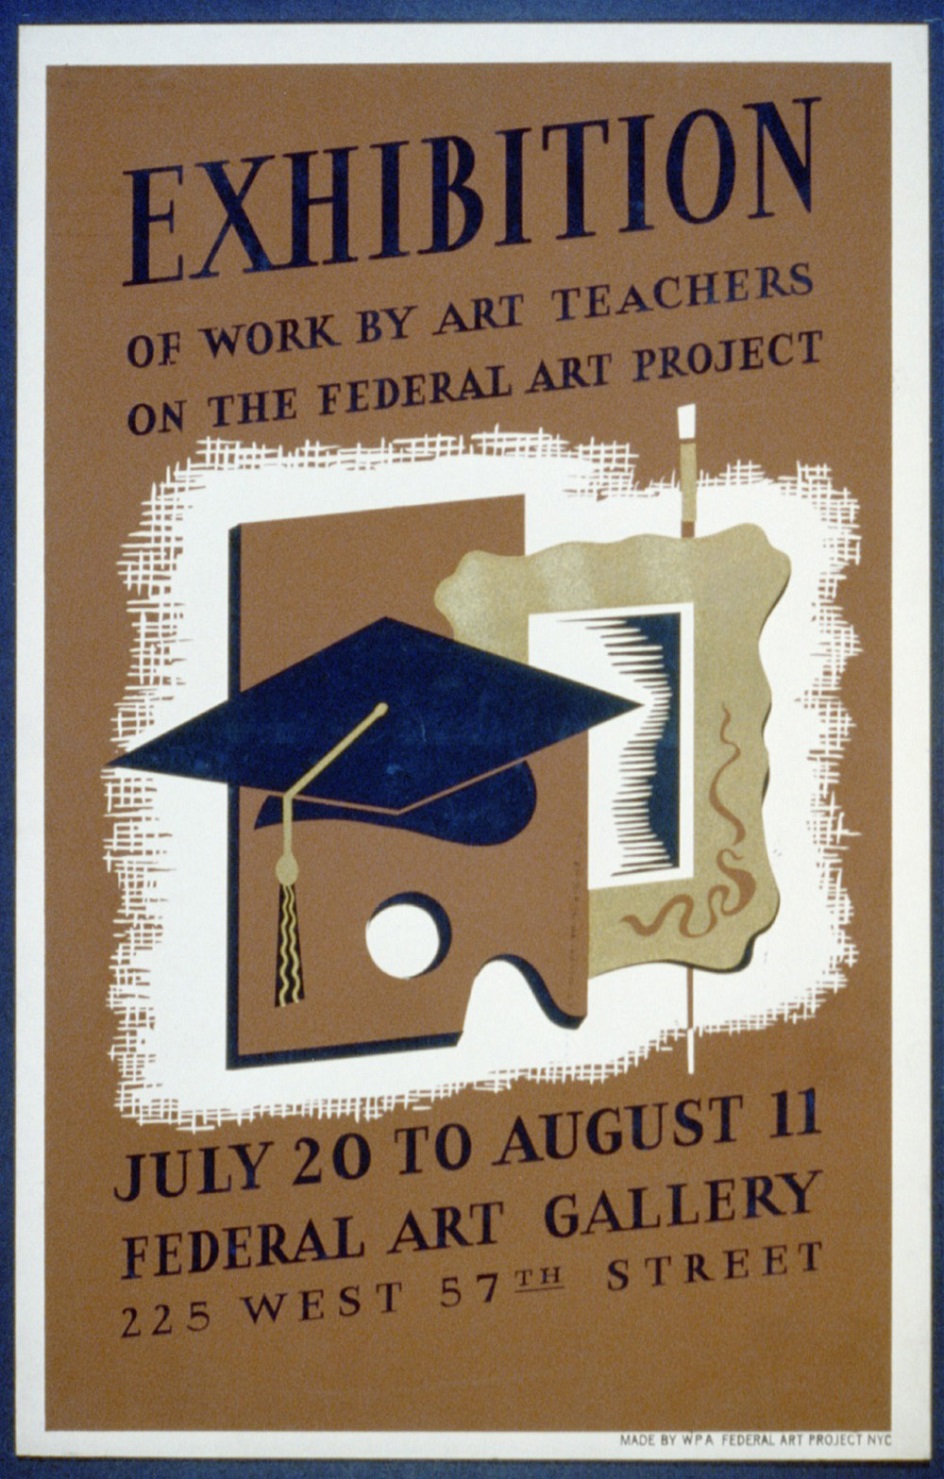 Энтони Велонис. Постер Exhibition of work by art teachers on the Federal Art Project, 1938